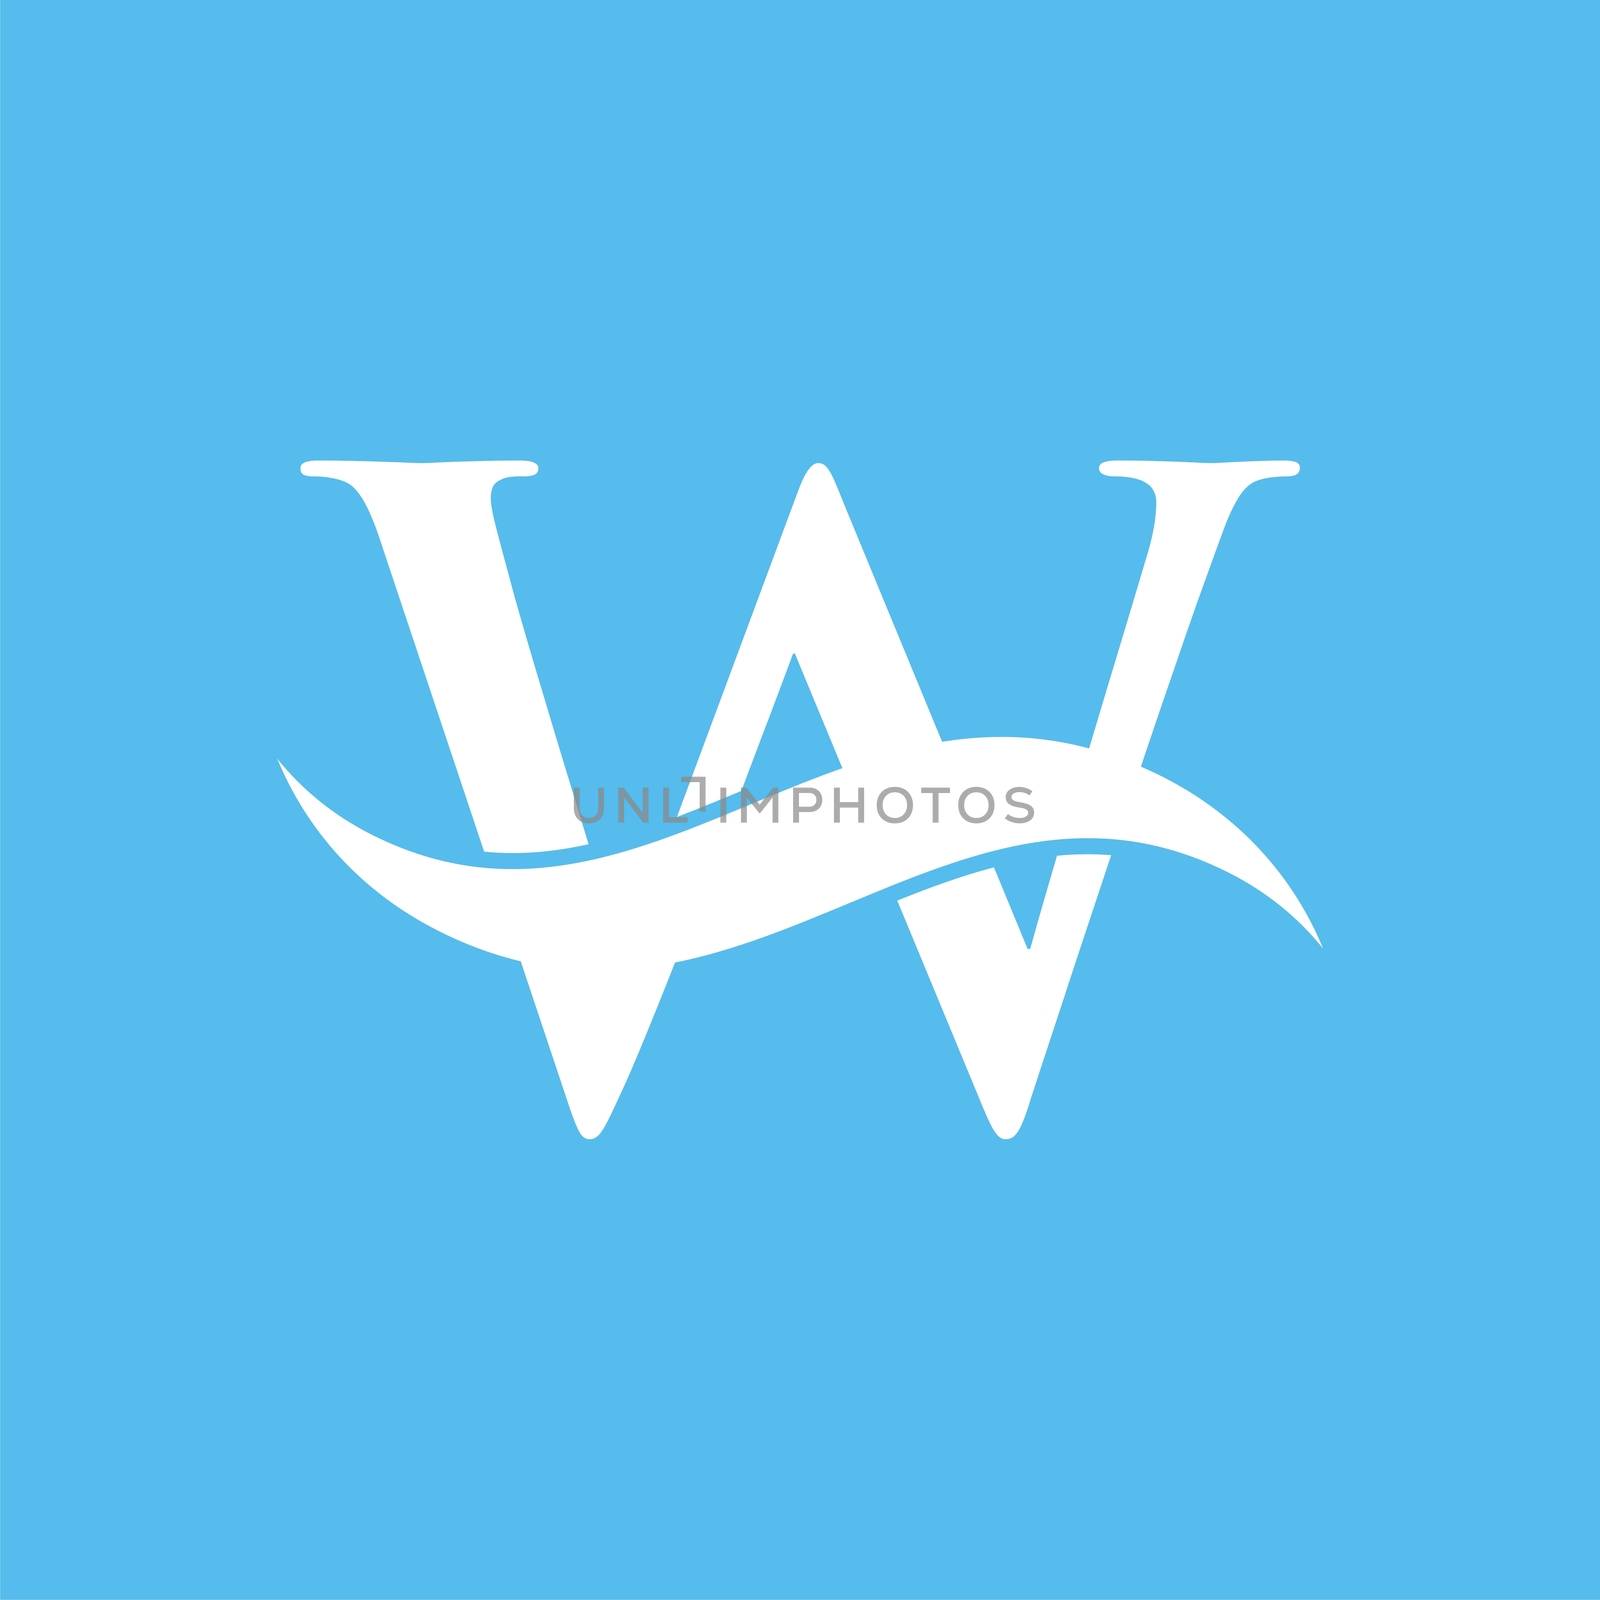 W Letter Wave Logo Template Illustration Design. Vector EPS 10. by soponyono